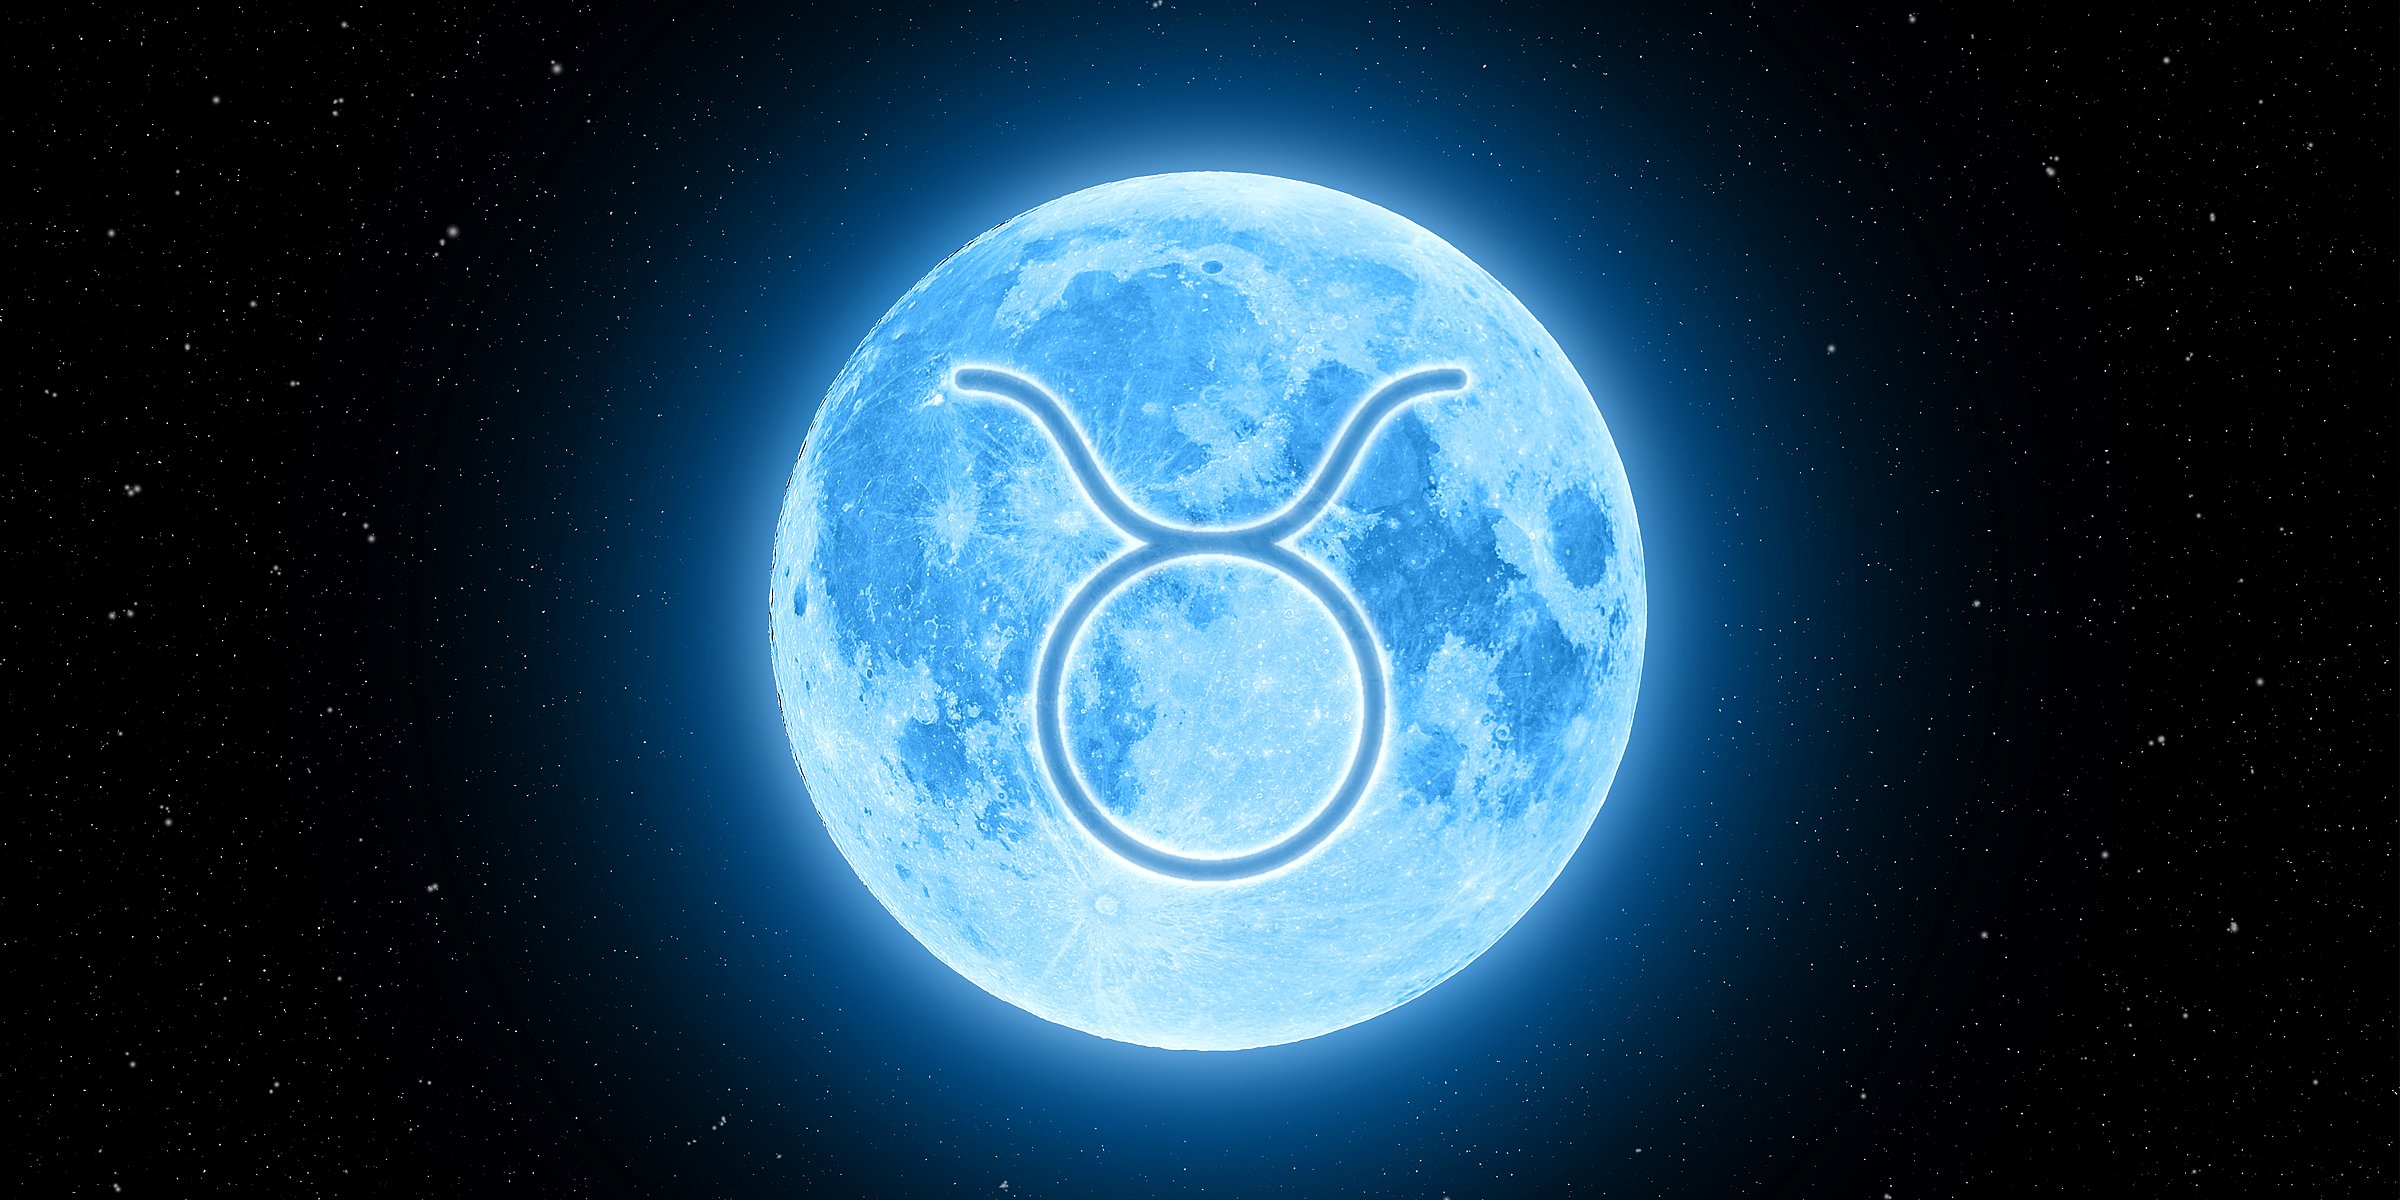 Full moon in Taurus. | Source: Shutterstock.com